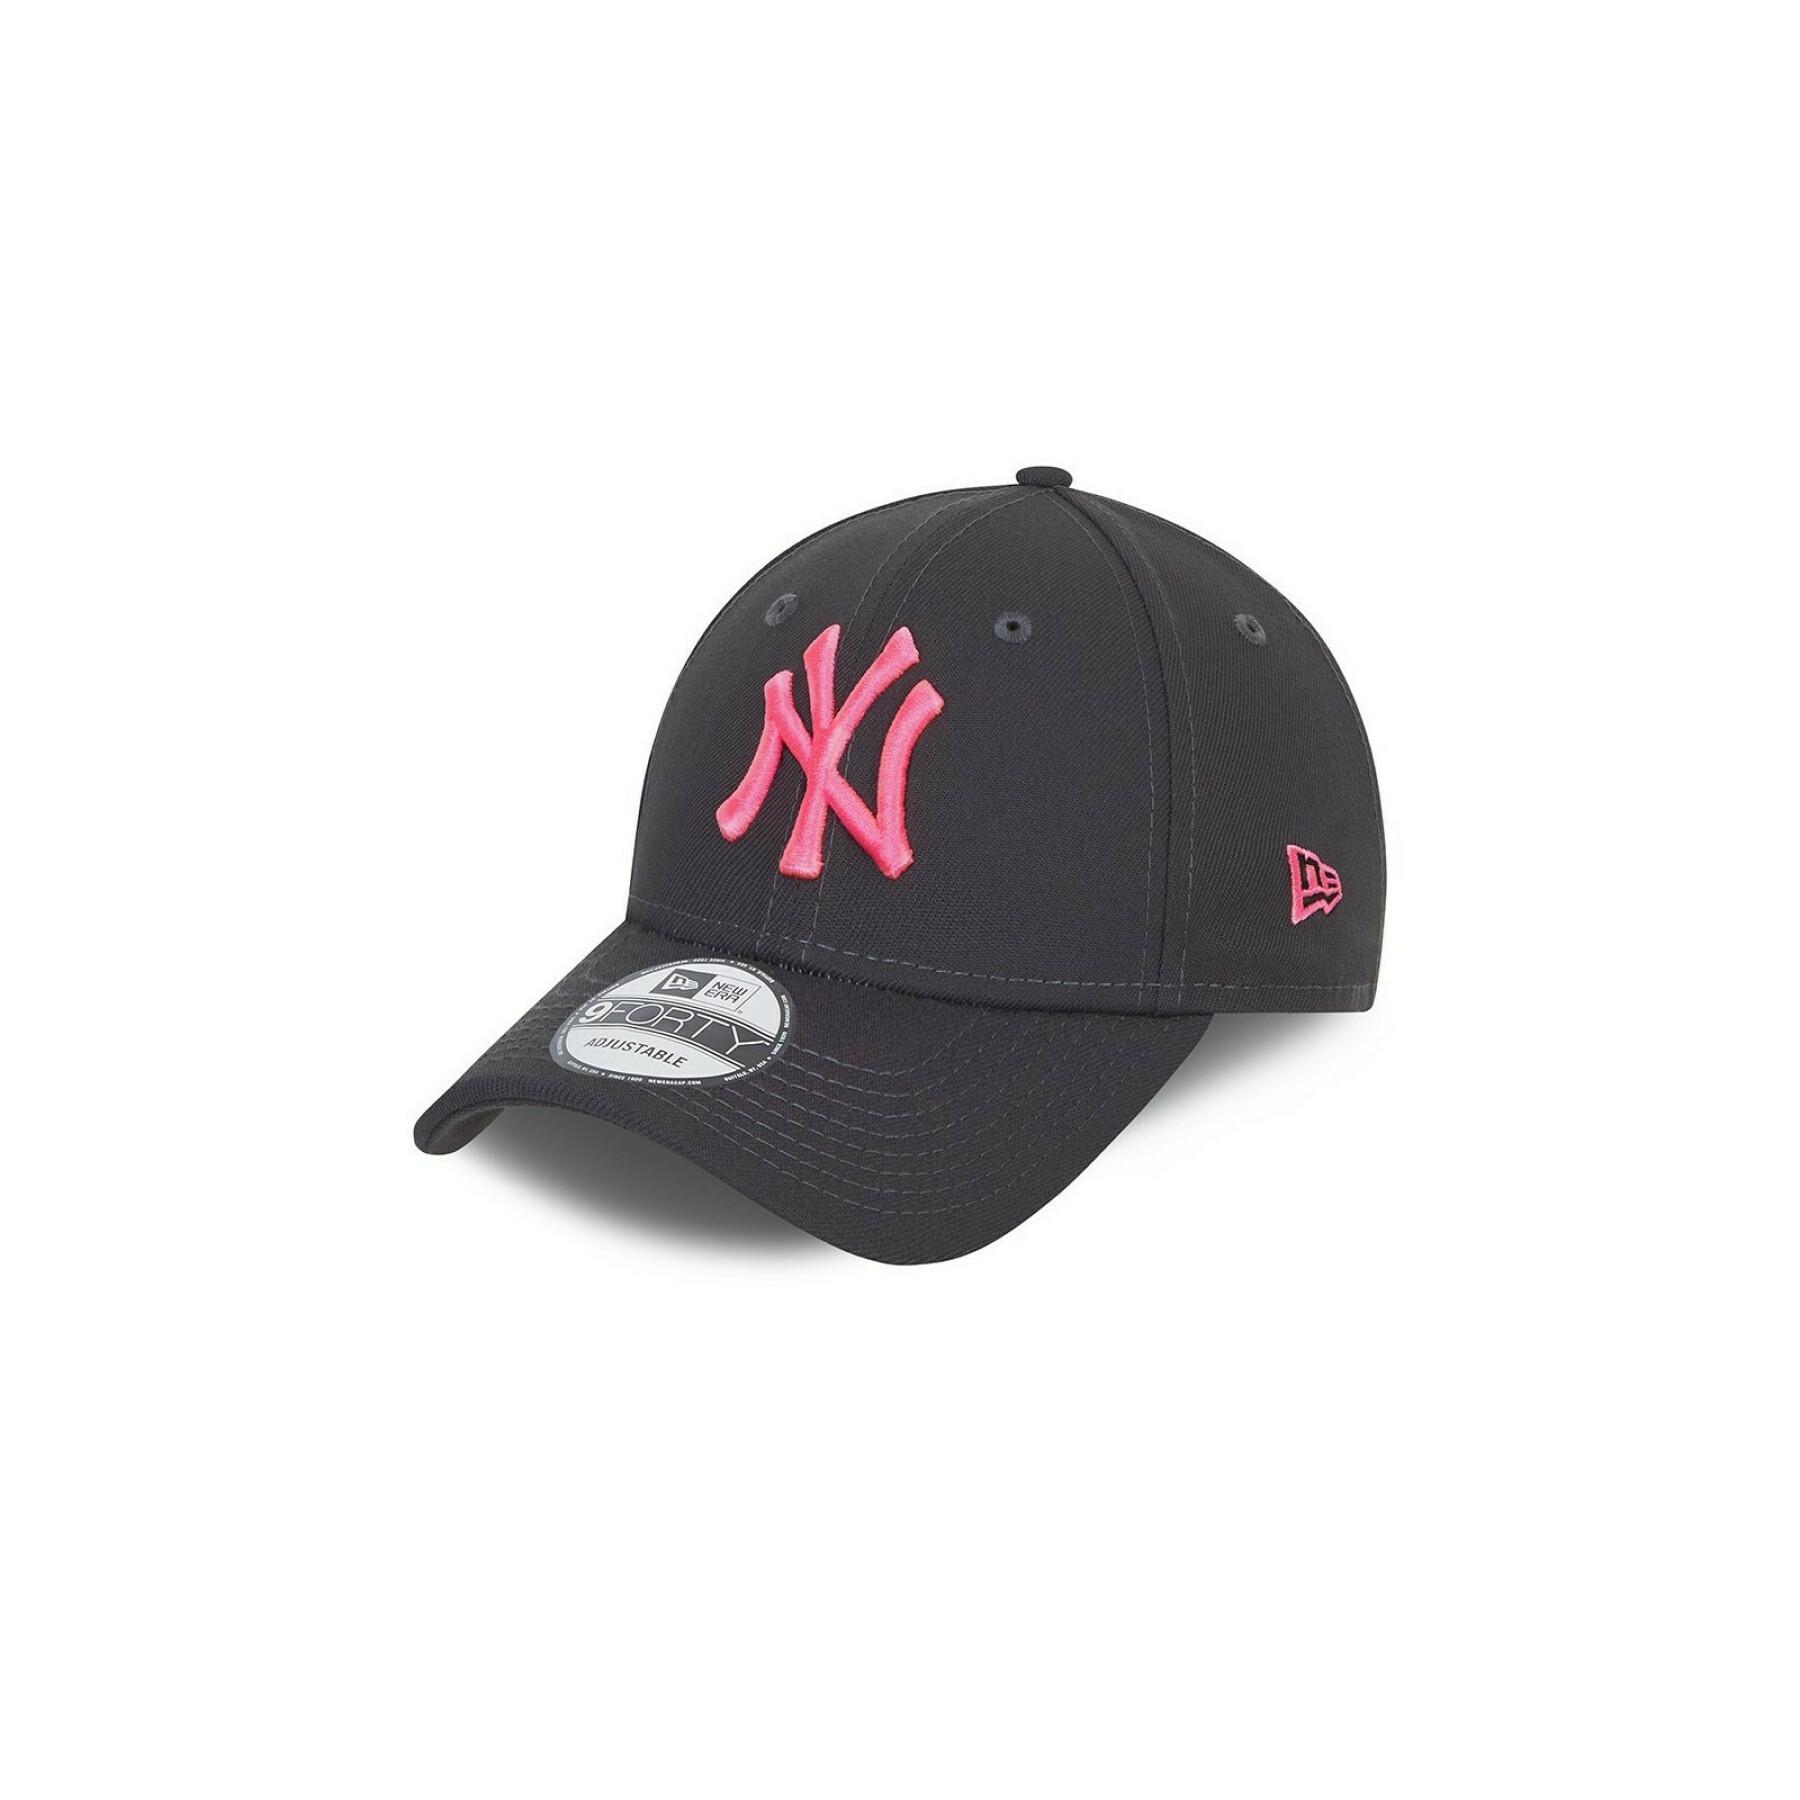 Gorra New Era 9forty New York Yankees neon pack